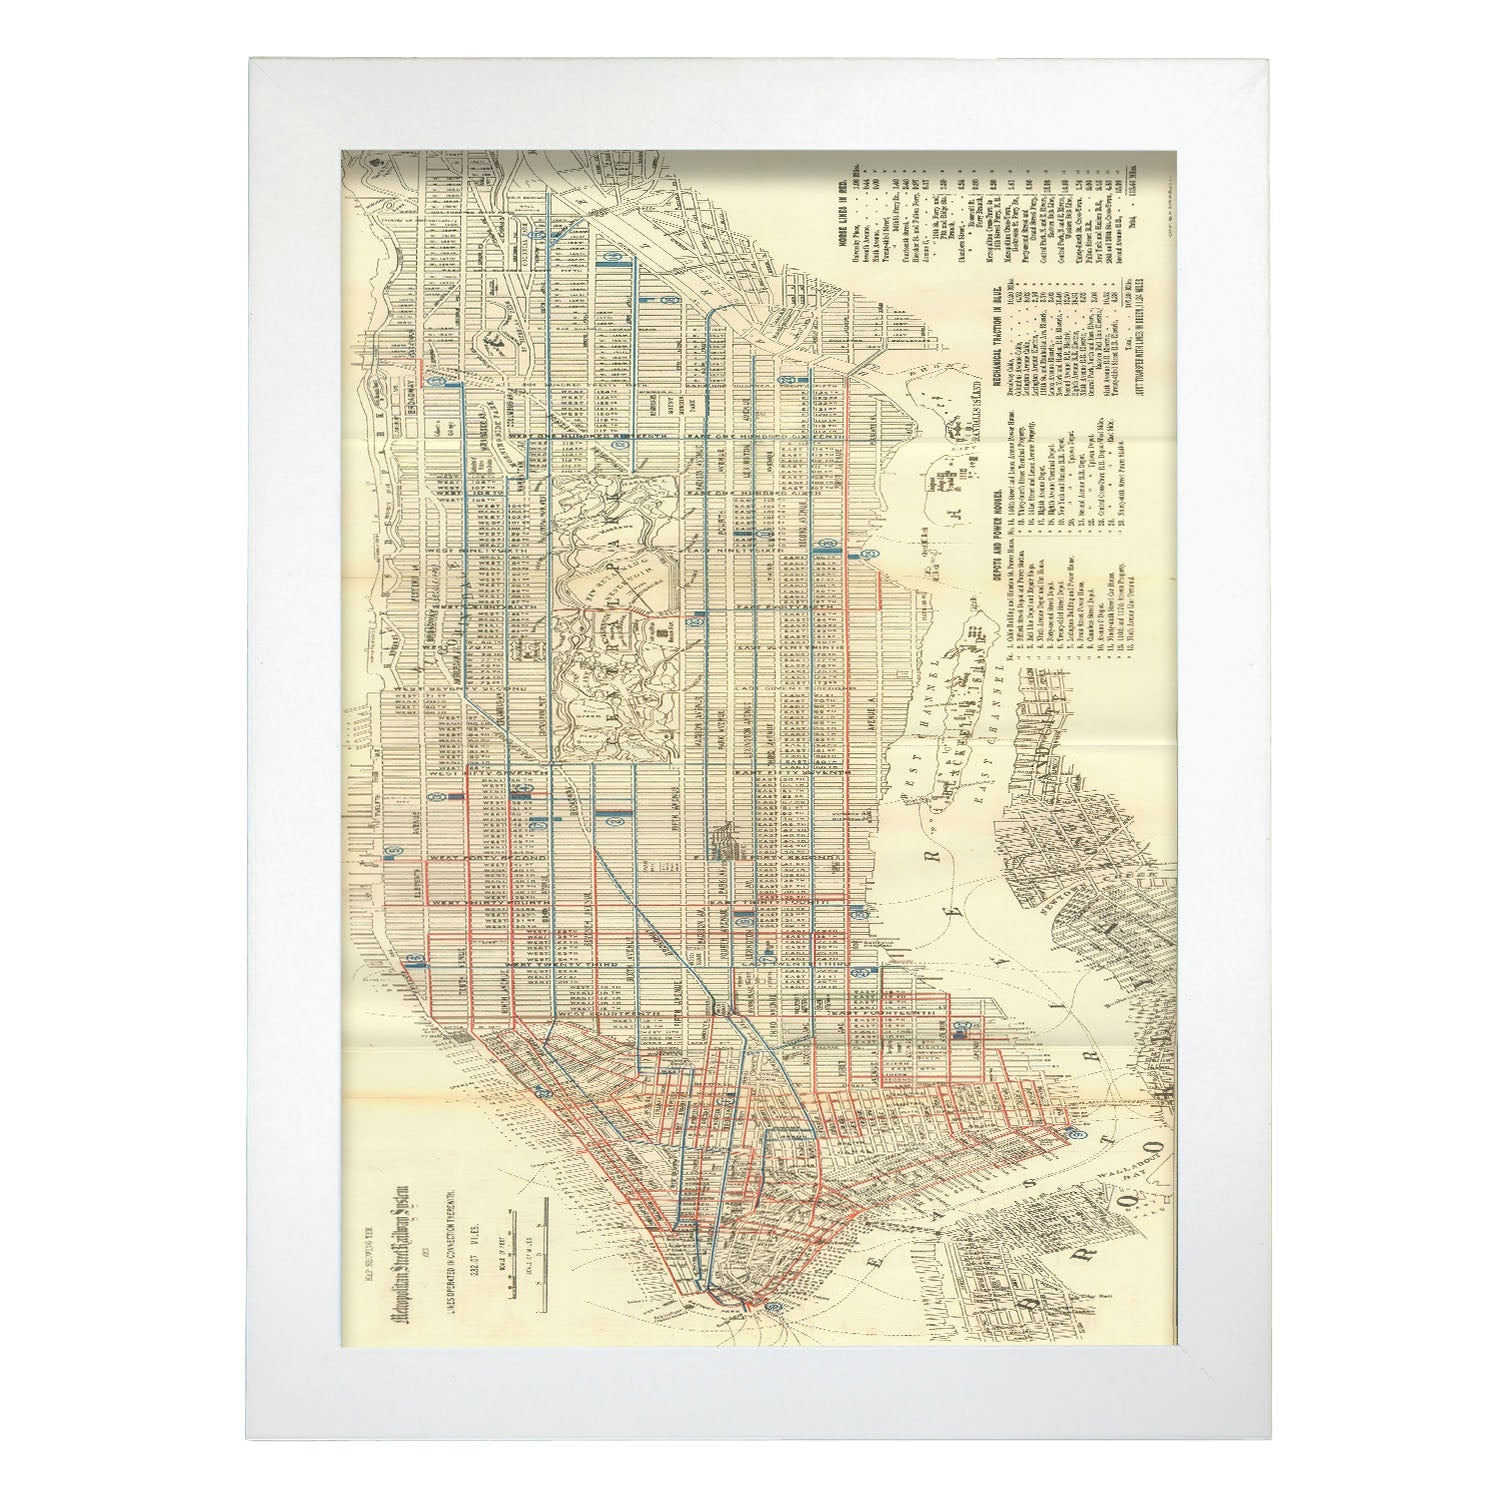 1899 Manhattan street railways-Artwork-Nacnic-A4-Marco Blanco-Nacnic Estudio SL